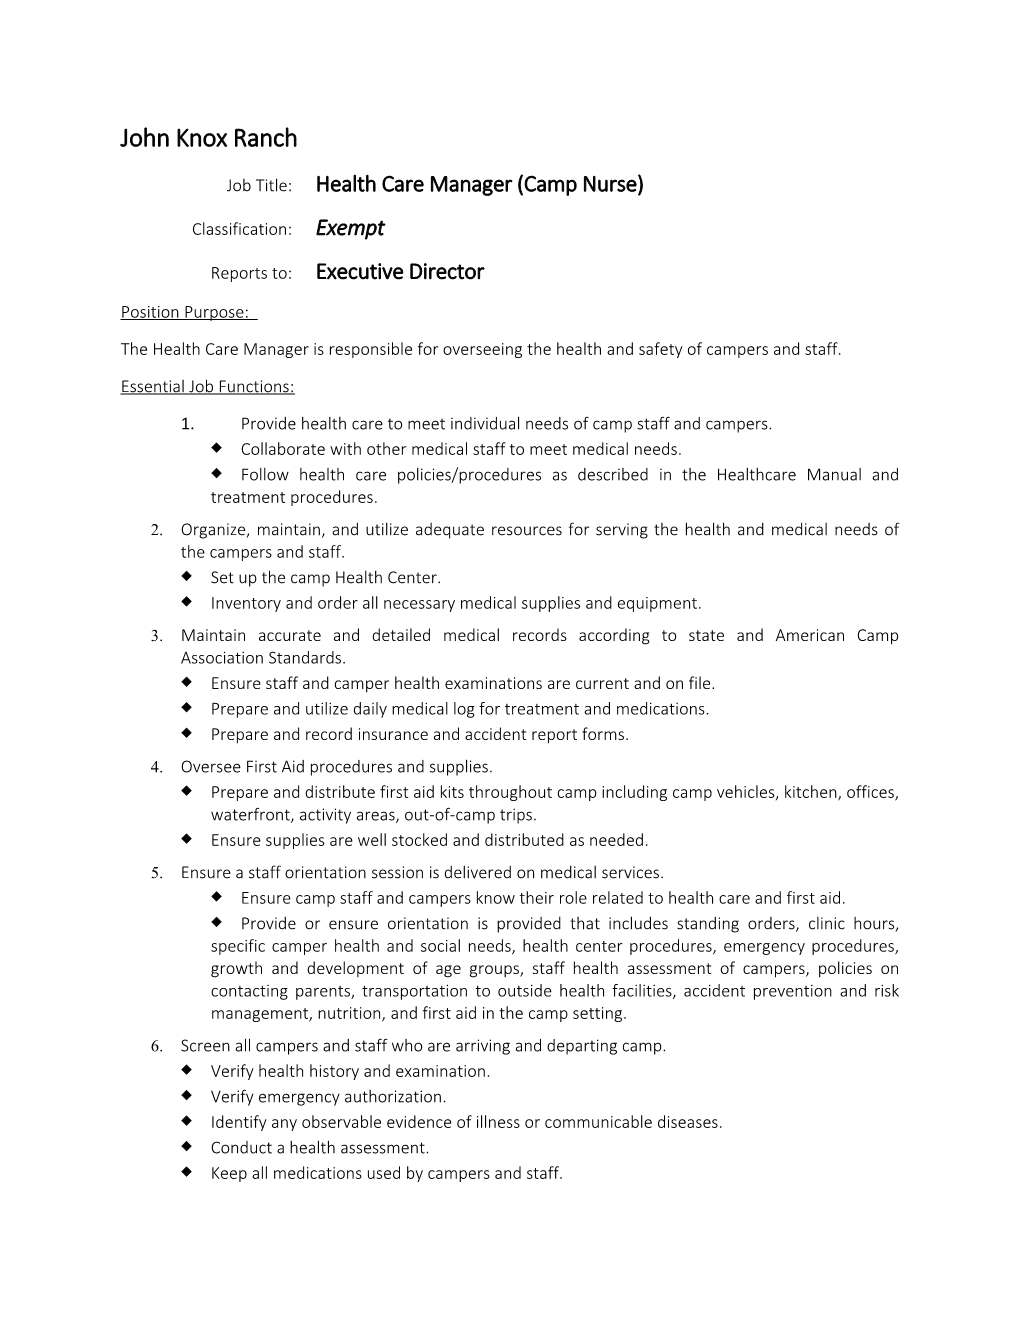 Job Title: Health Care Manager (Camp Nurse)